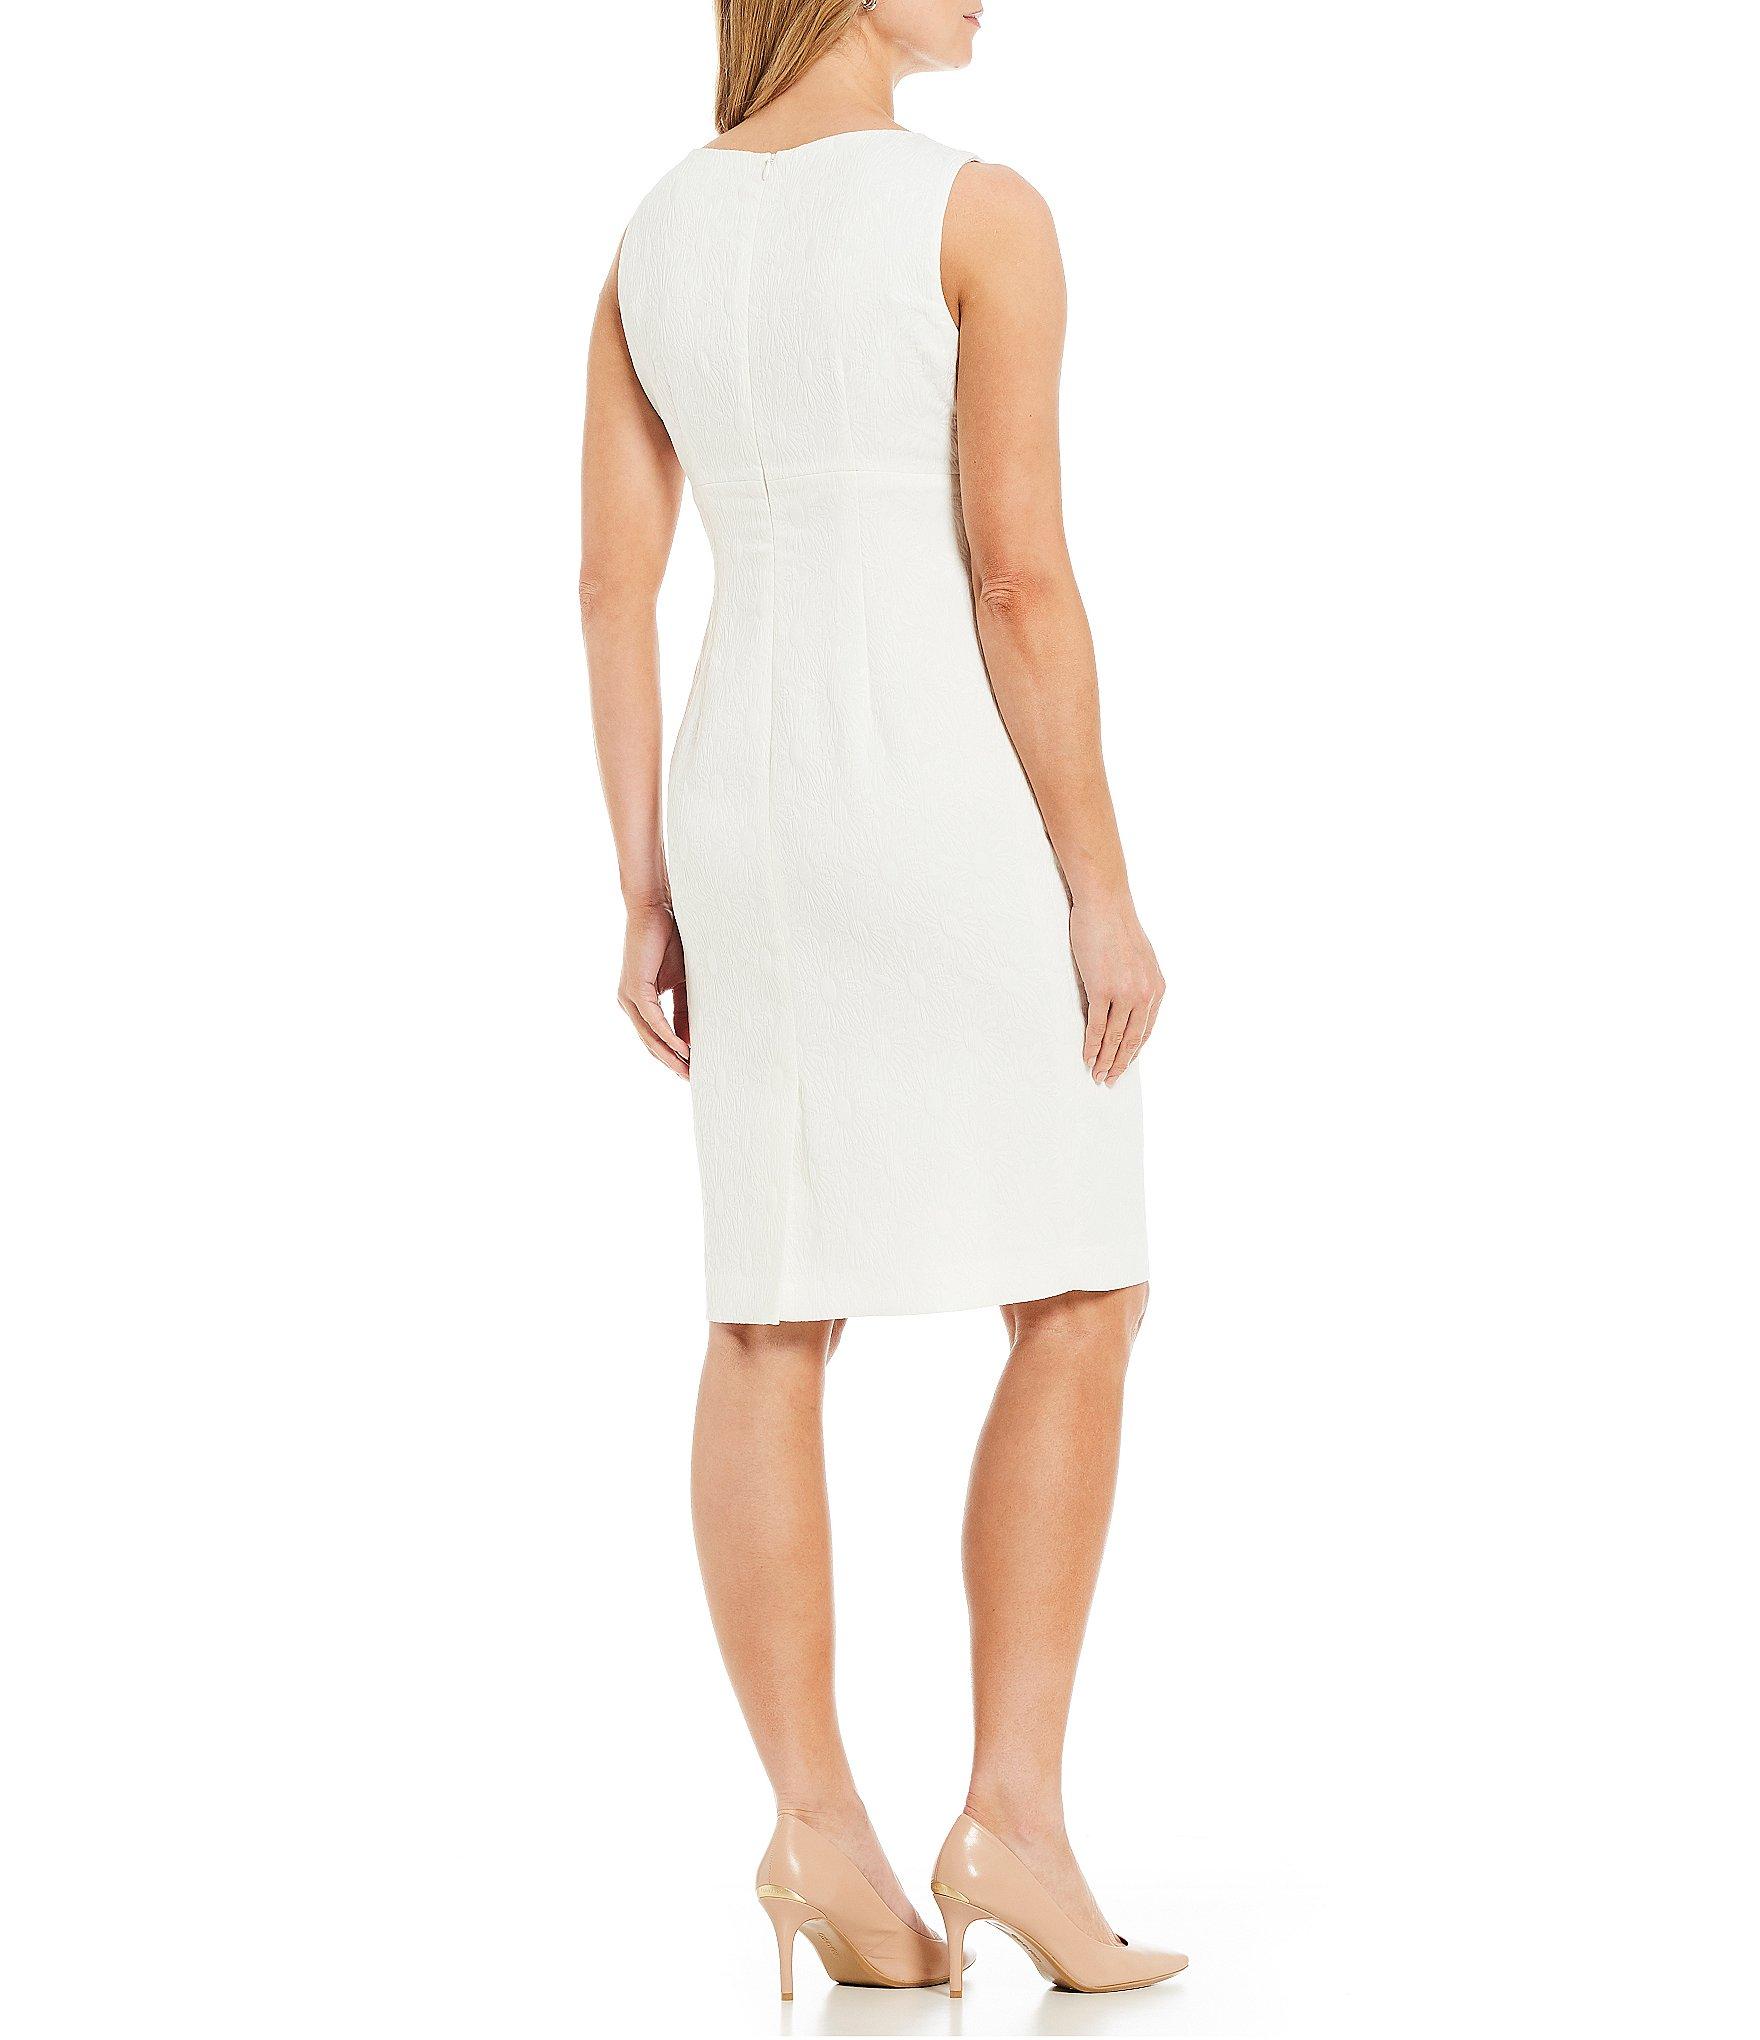 Lyst - Kasper Petite Size Jacquard Sleeveless Sheath Dress in White